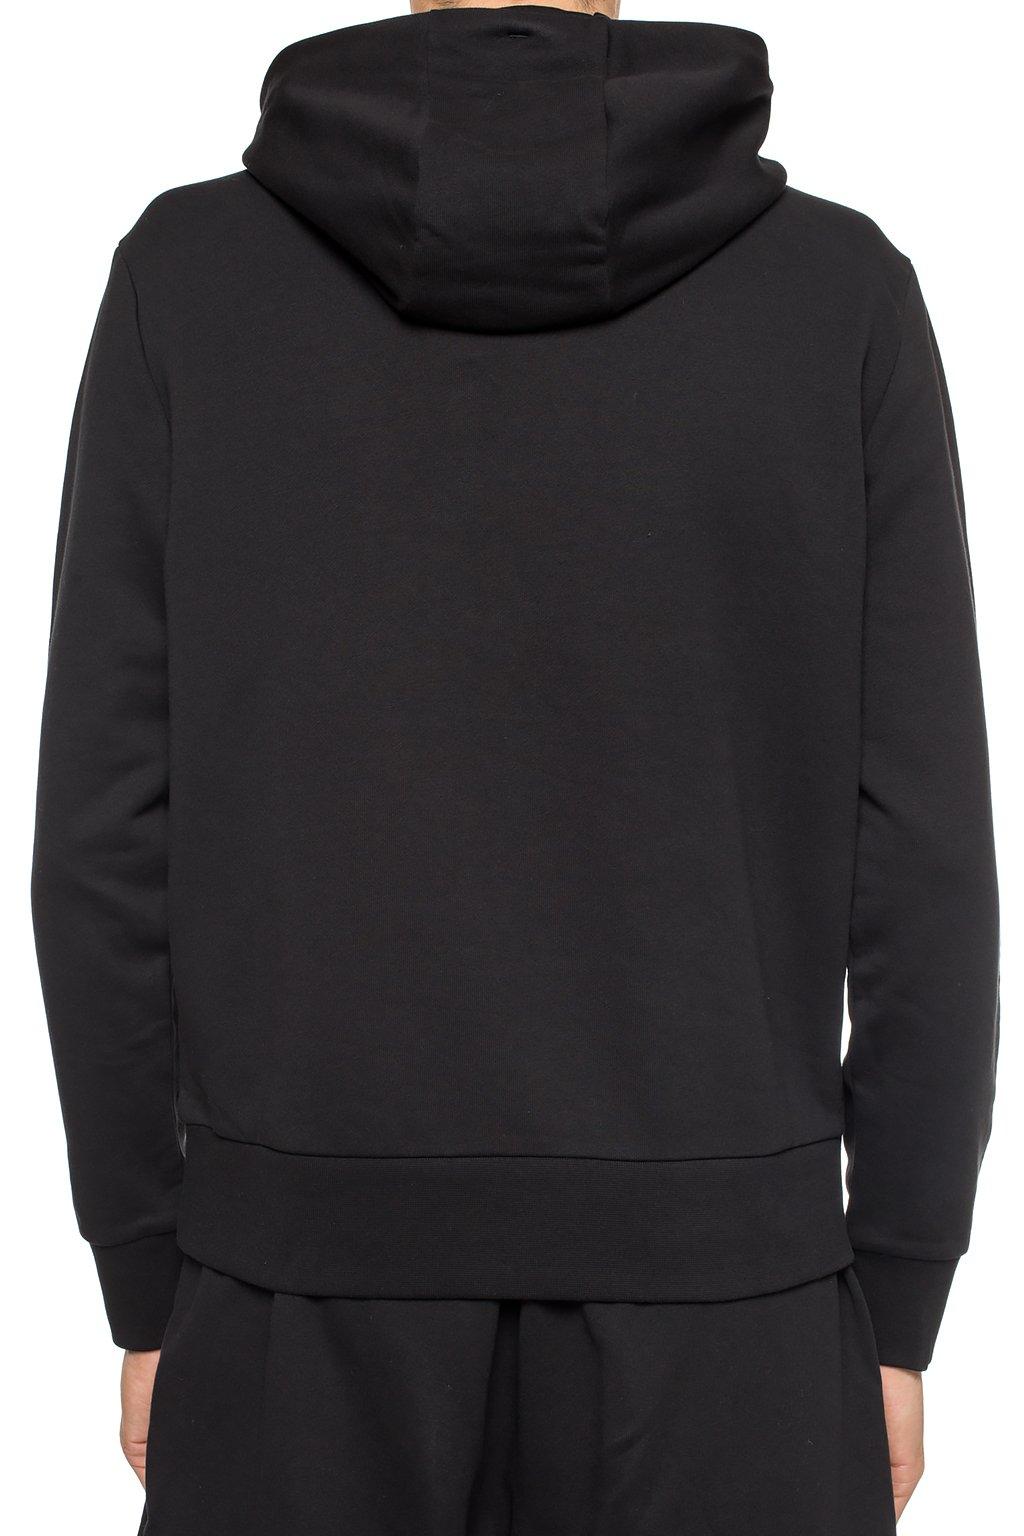 Moncler Cotton Hooded Sweatshirt in Black for Men - Lyst